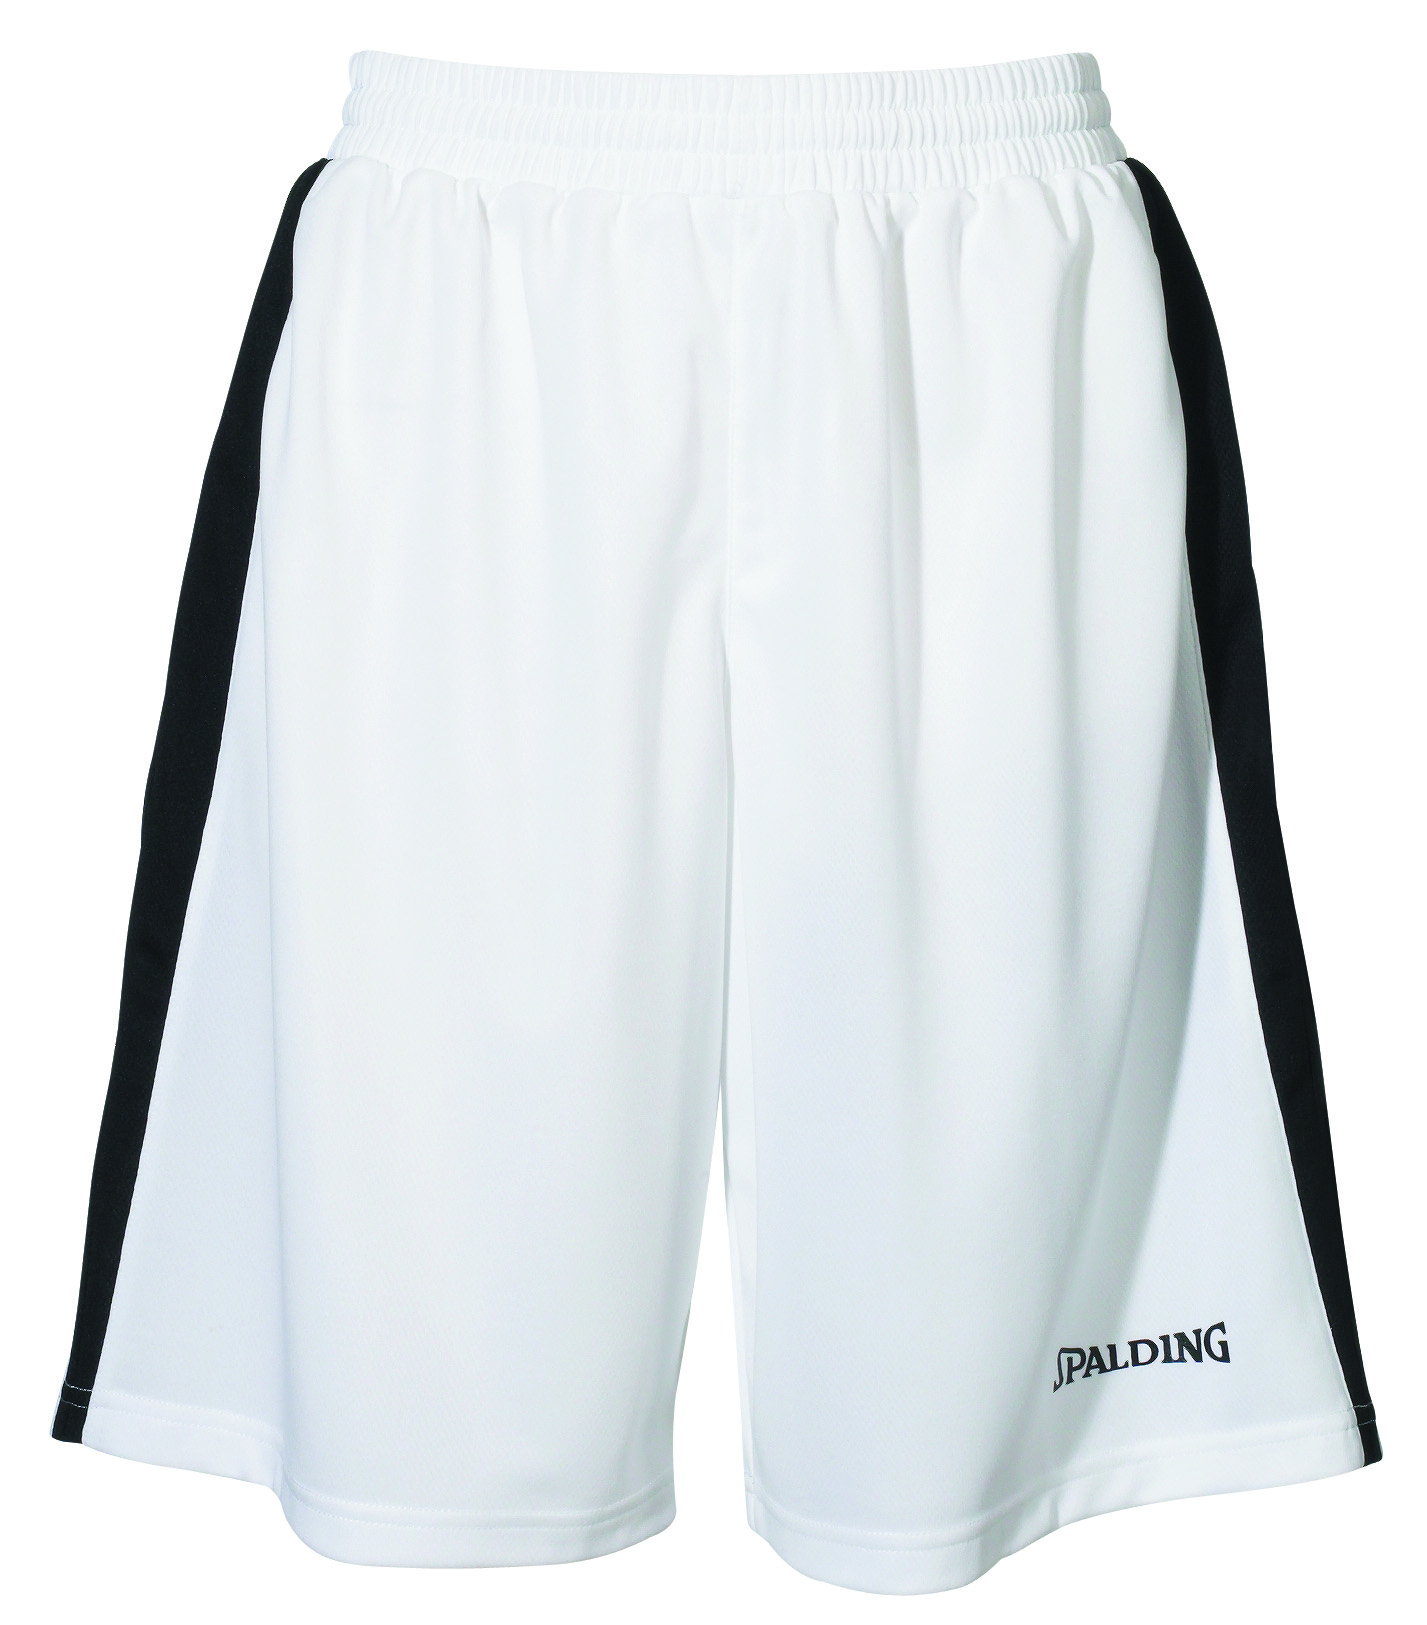 Spalding Damen Basketball Shorts Freizeit Sport Hose XS M L 2XL neu | eBay